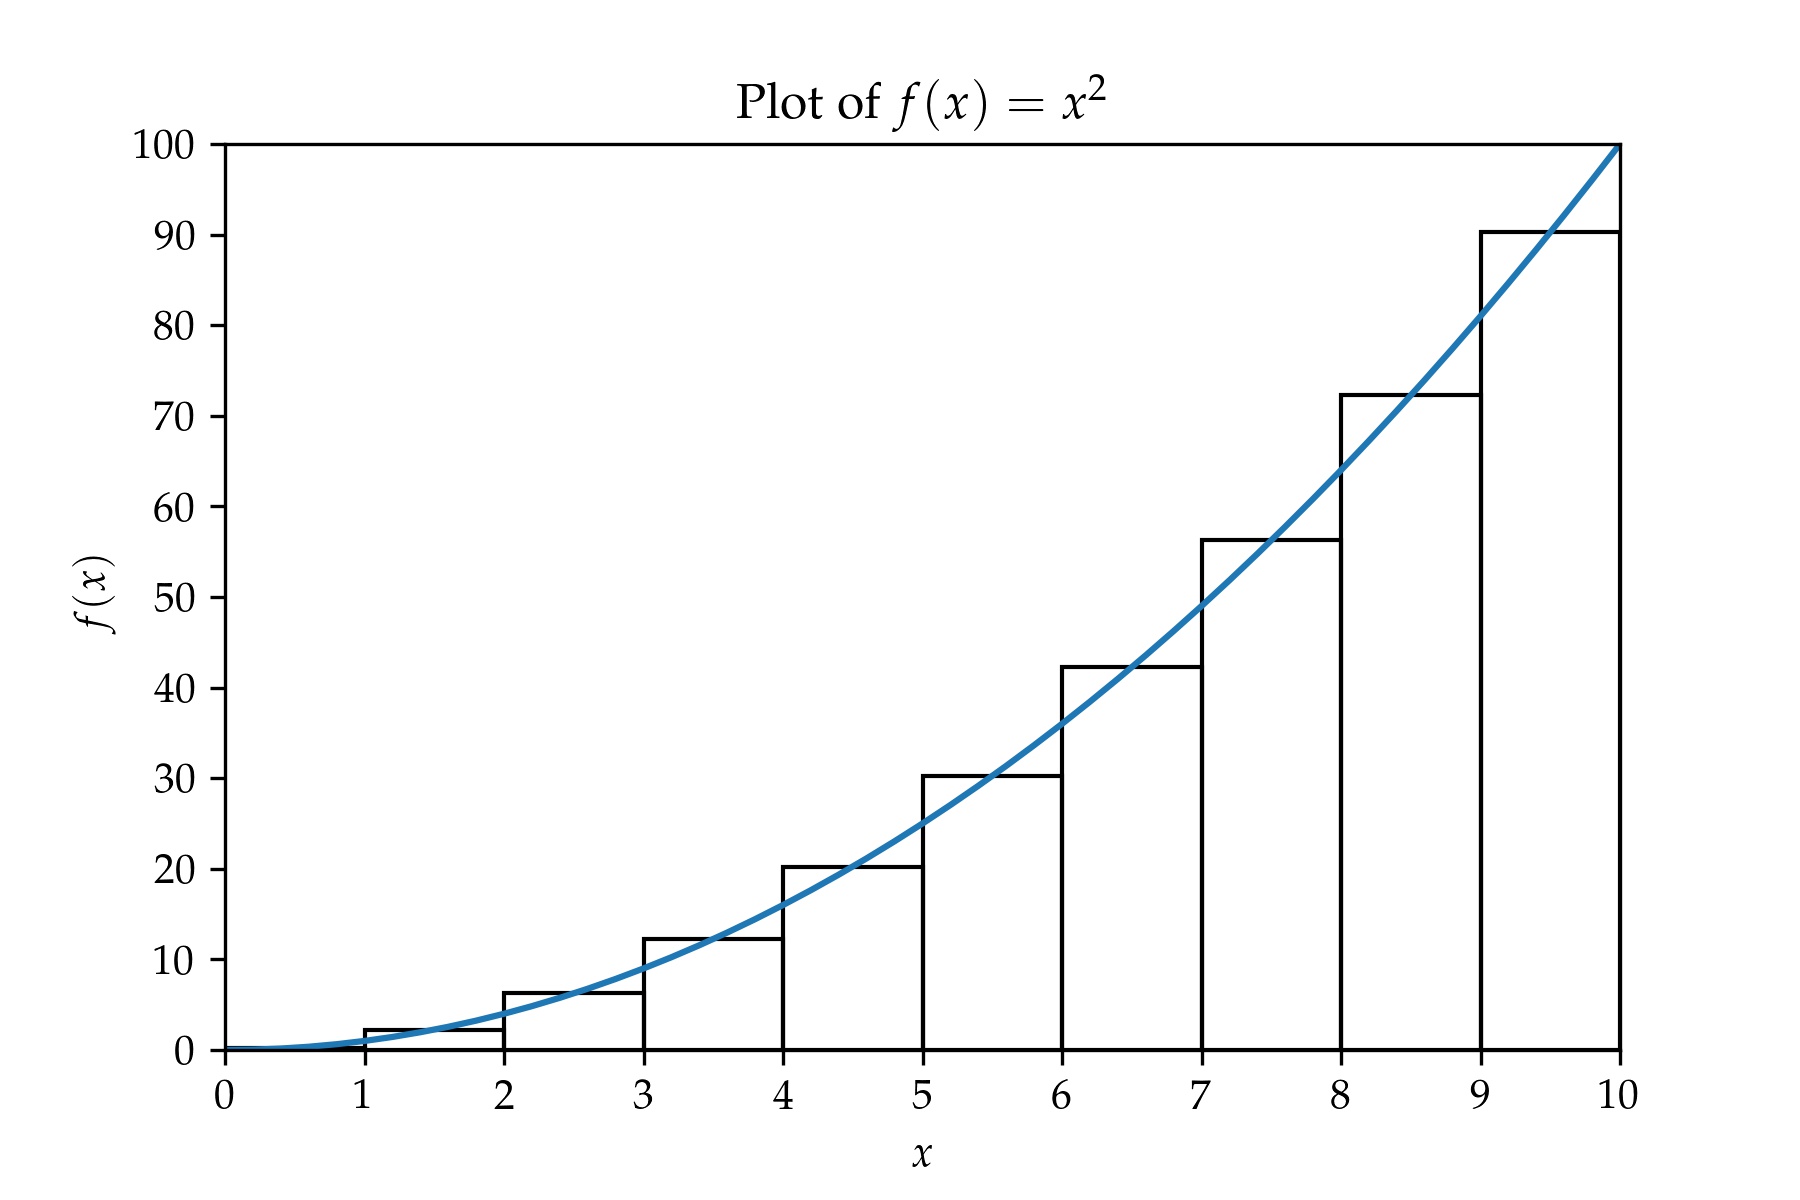 Plot of f(x) = x^2